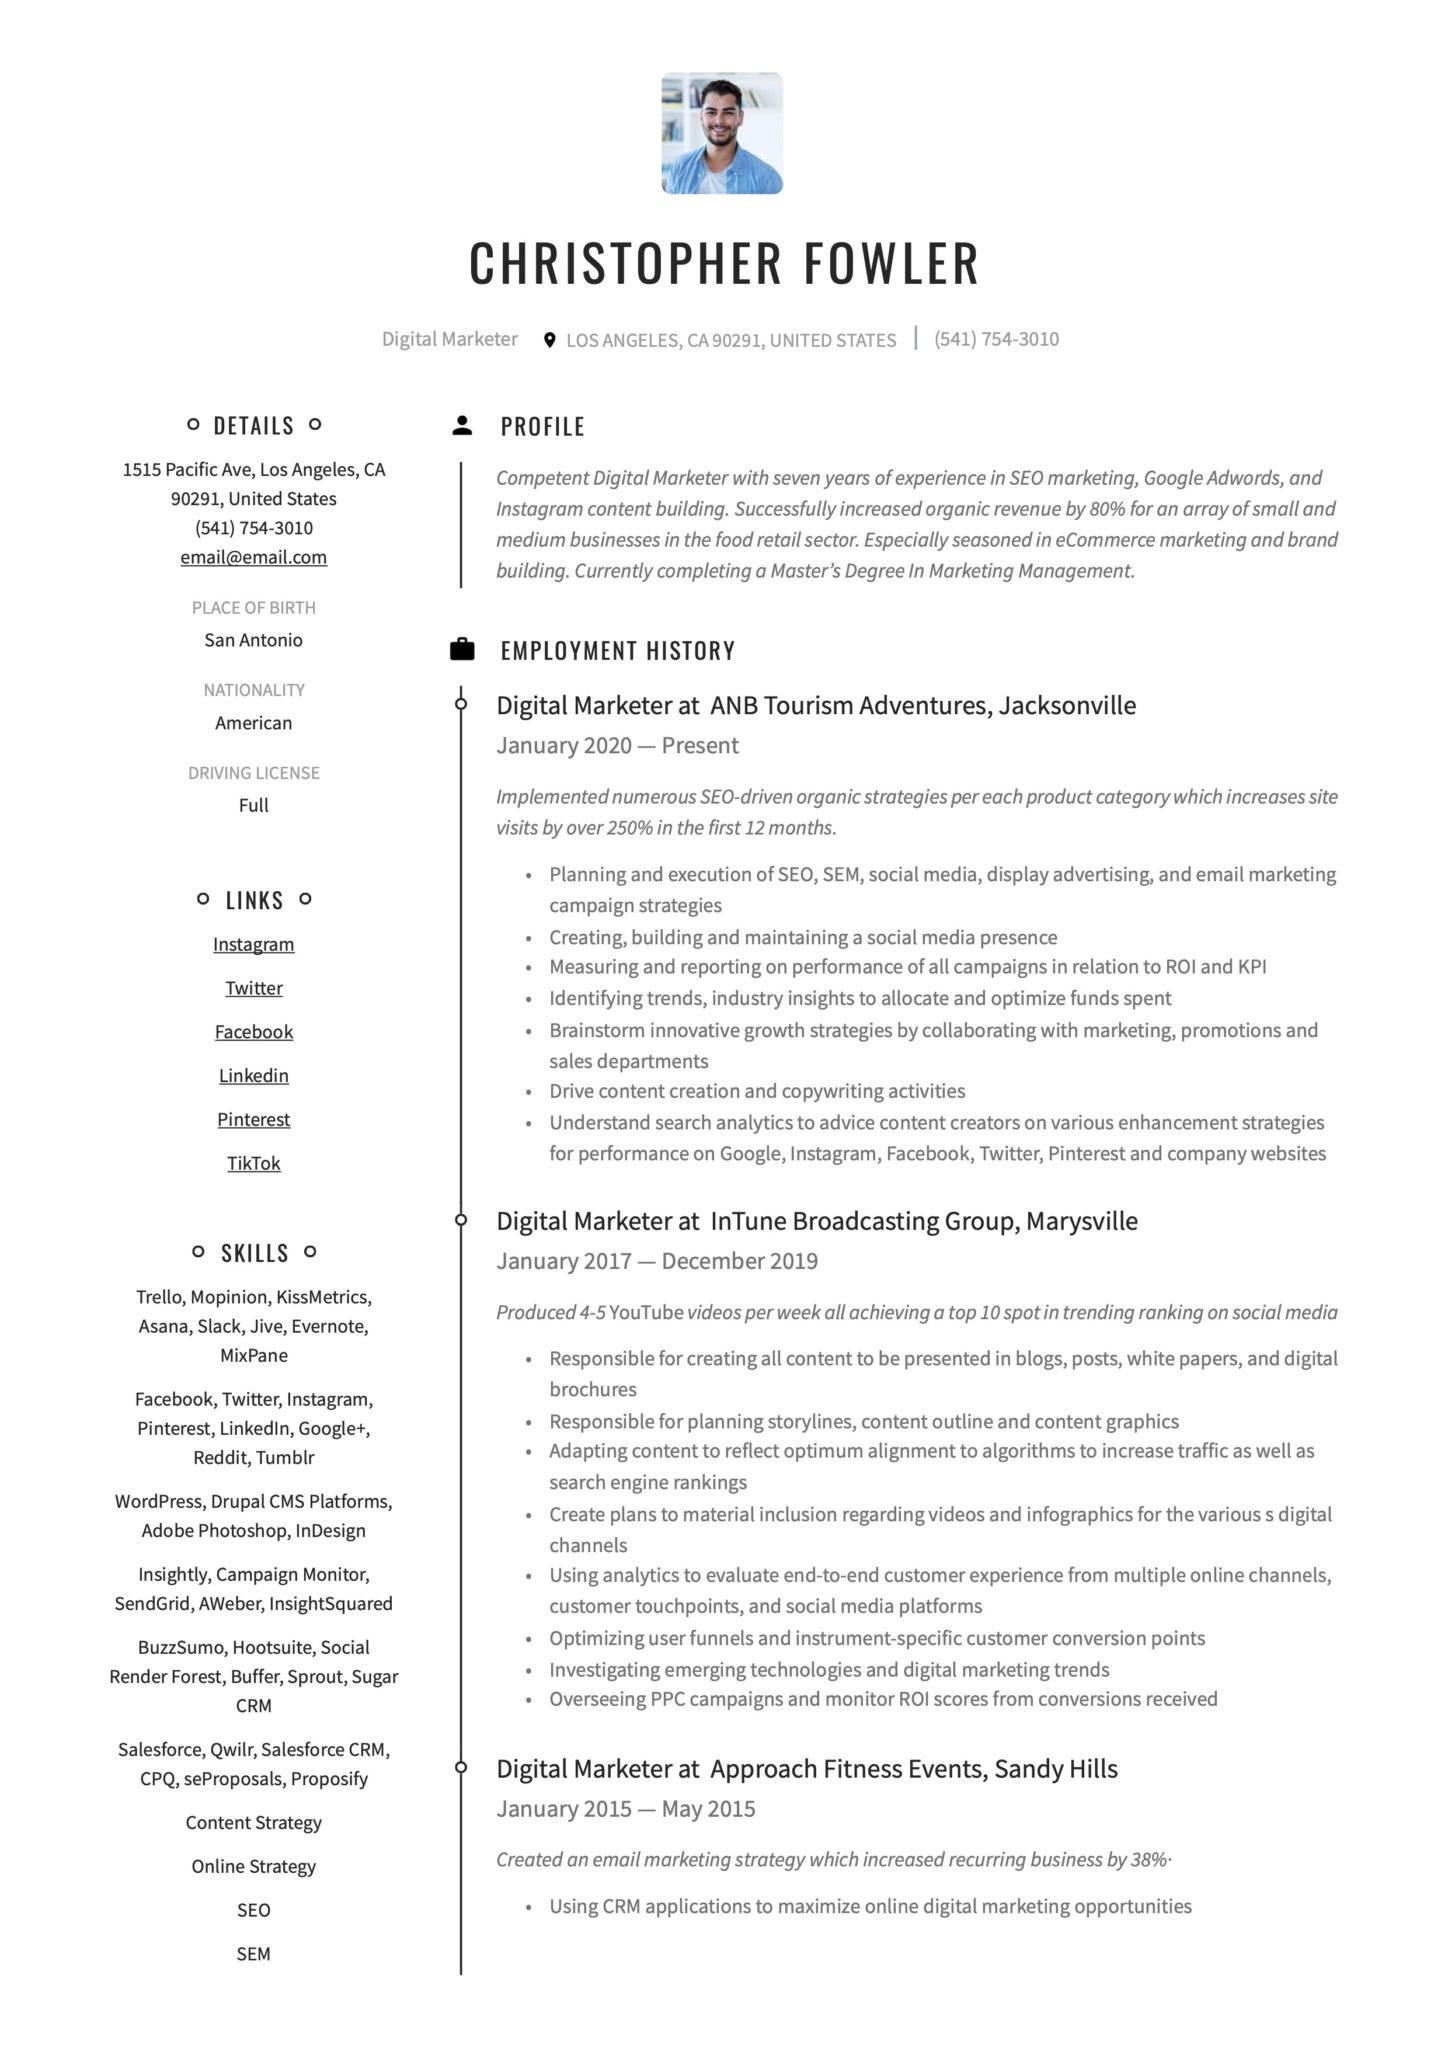 Digital Marketing Executive Resume Sample Pdf 19 Digital Marketer Resume Examples & Guide 2020 Pdf